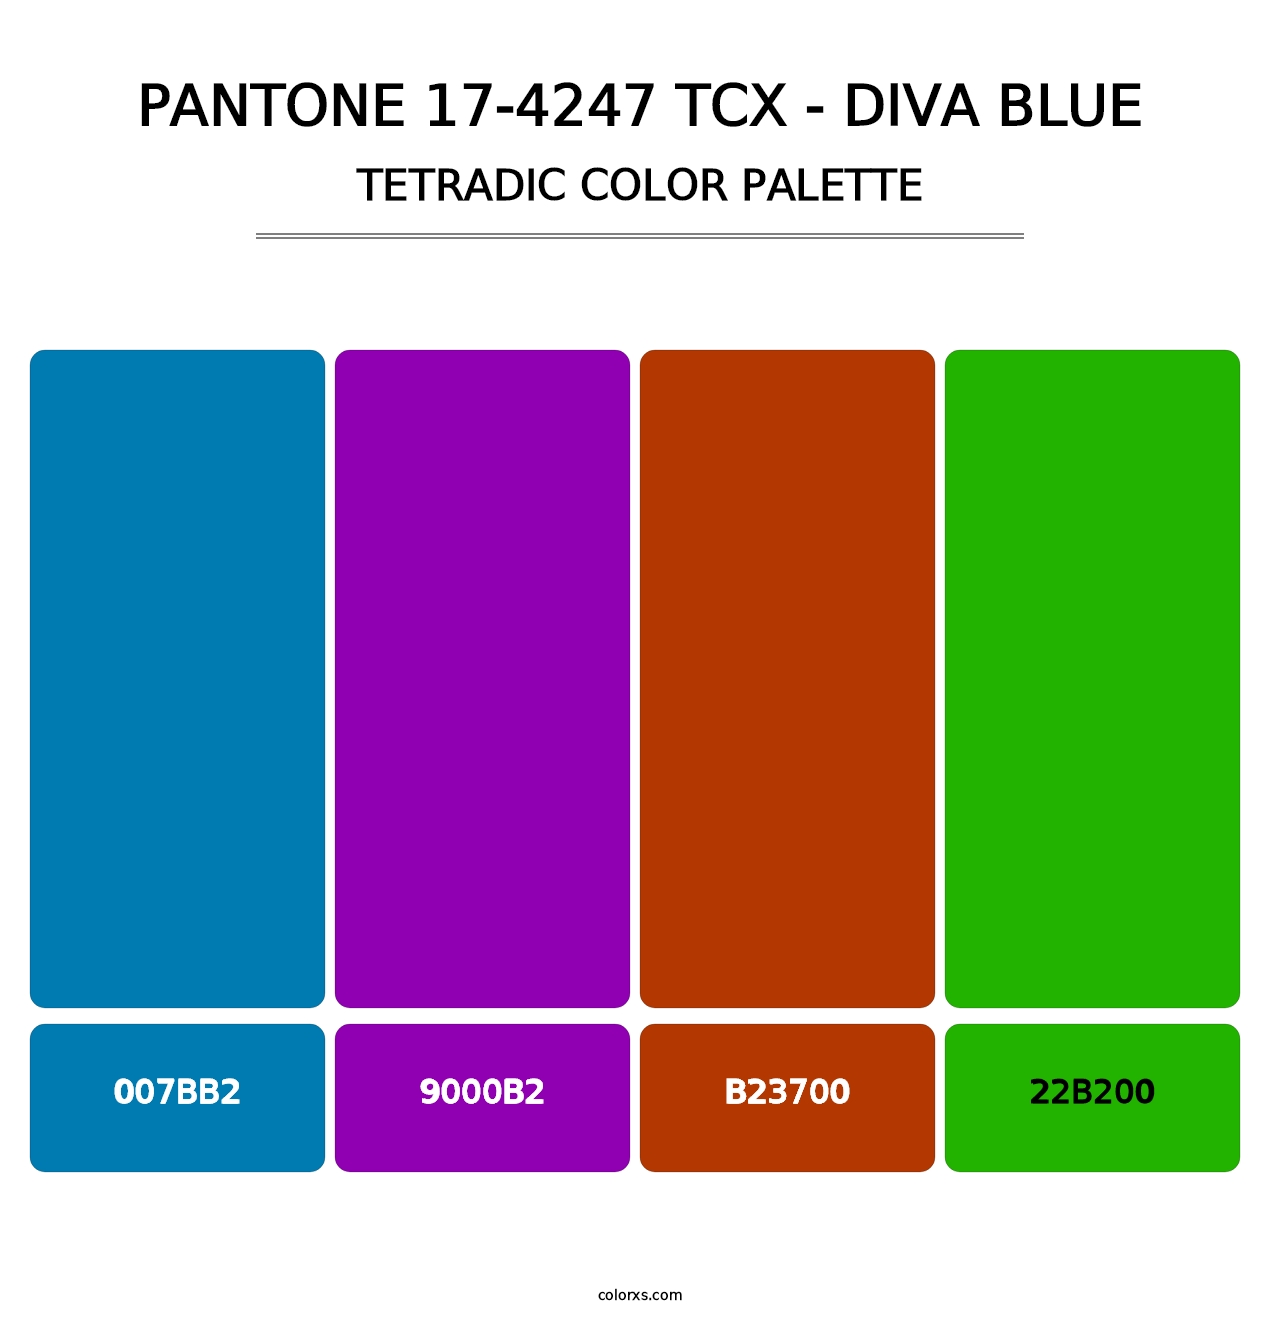 PANTONE 17-4247 TCX - Diva Blue - Tetradic Color Palette